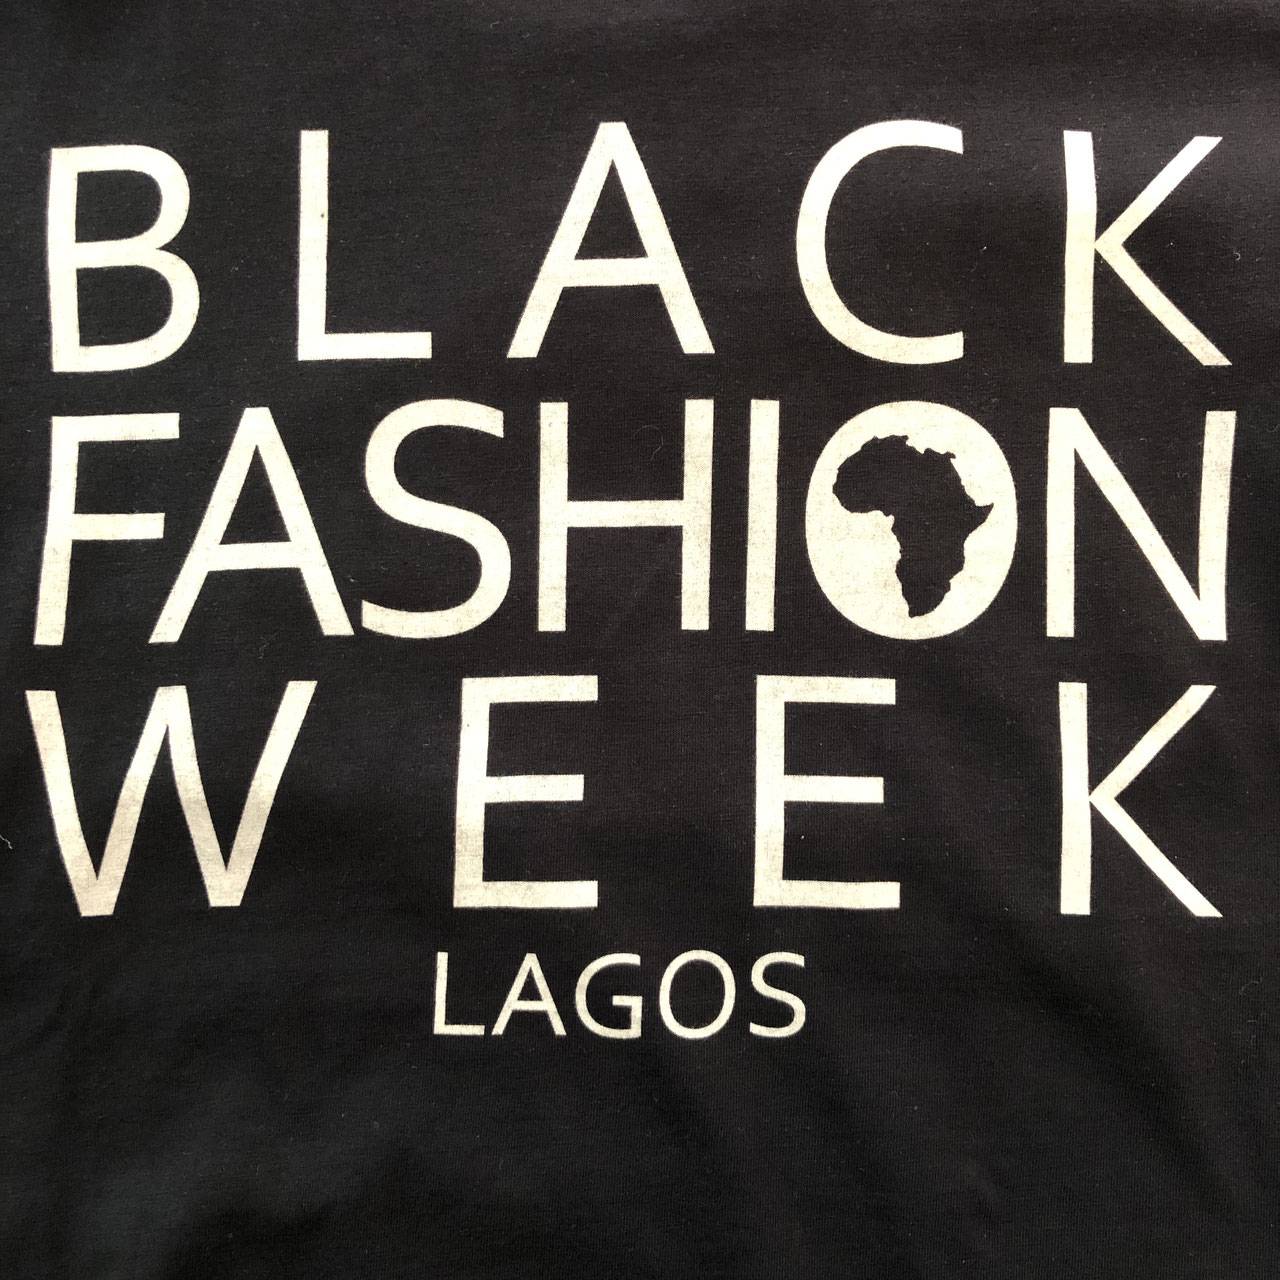 Lagos – T-Shirt Women's Fashion Cassare